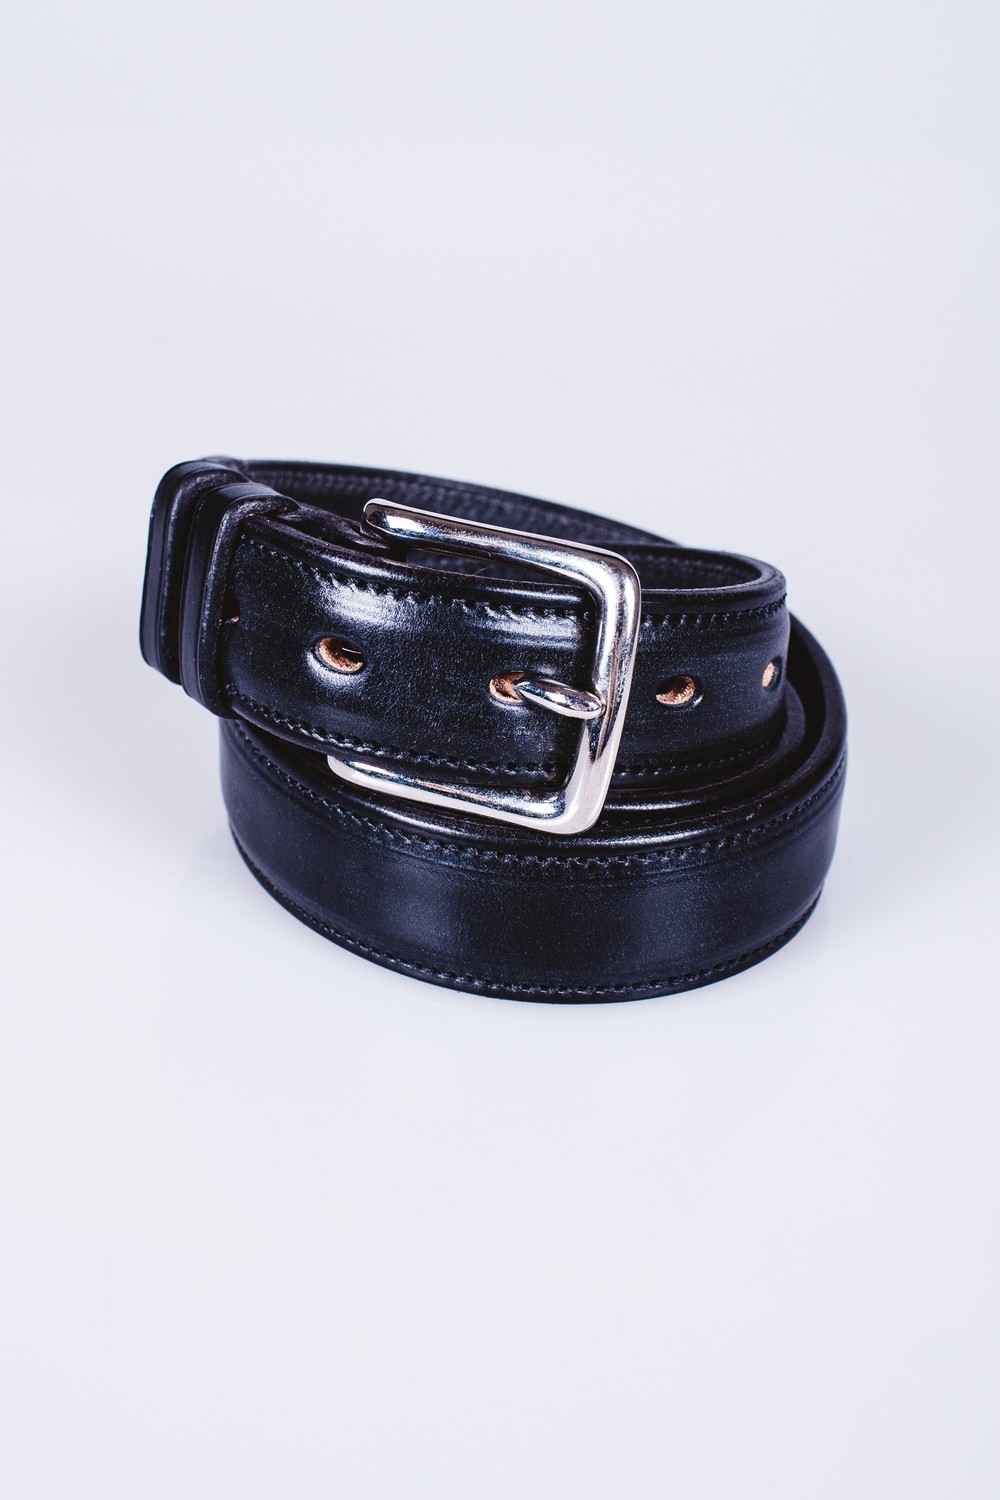 McRostie Black Leather Belt